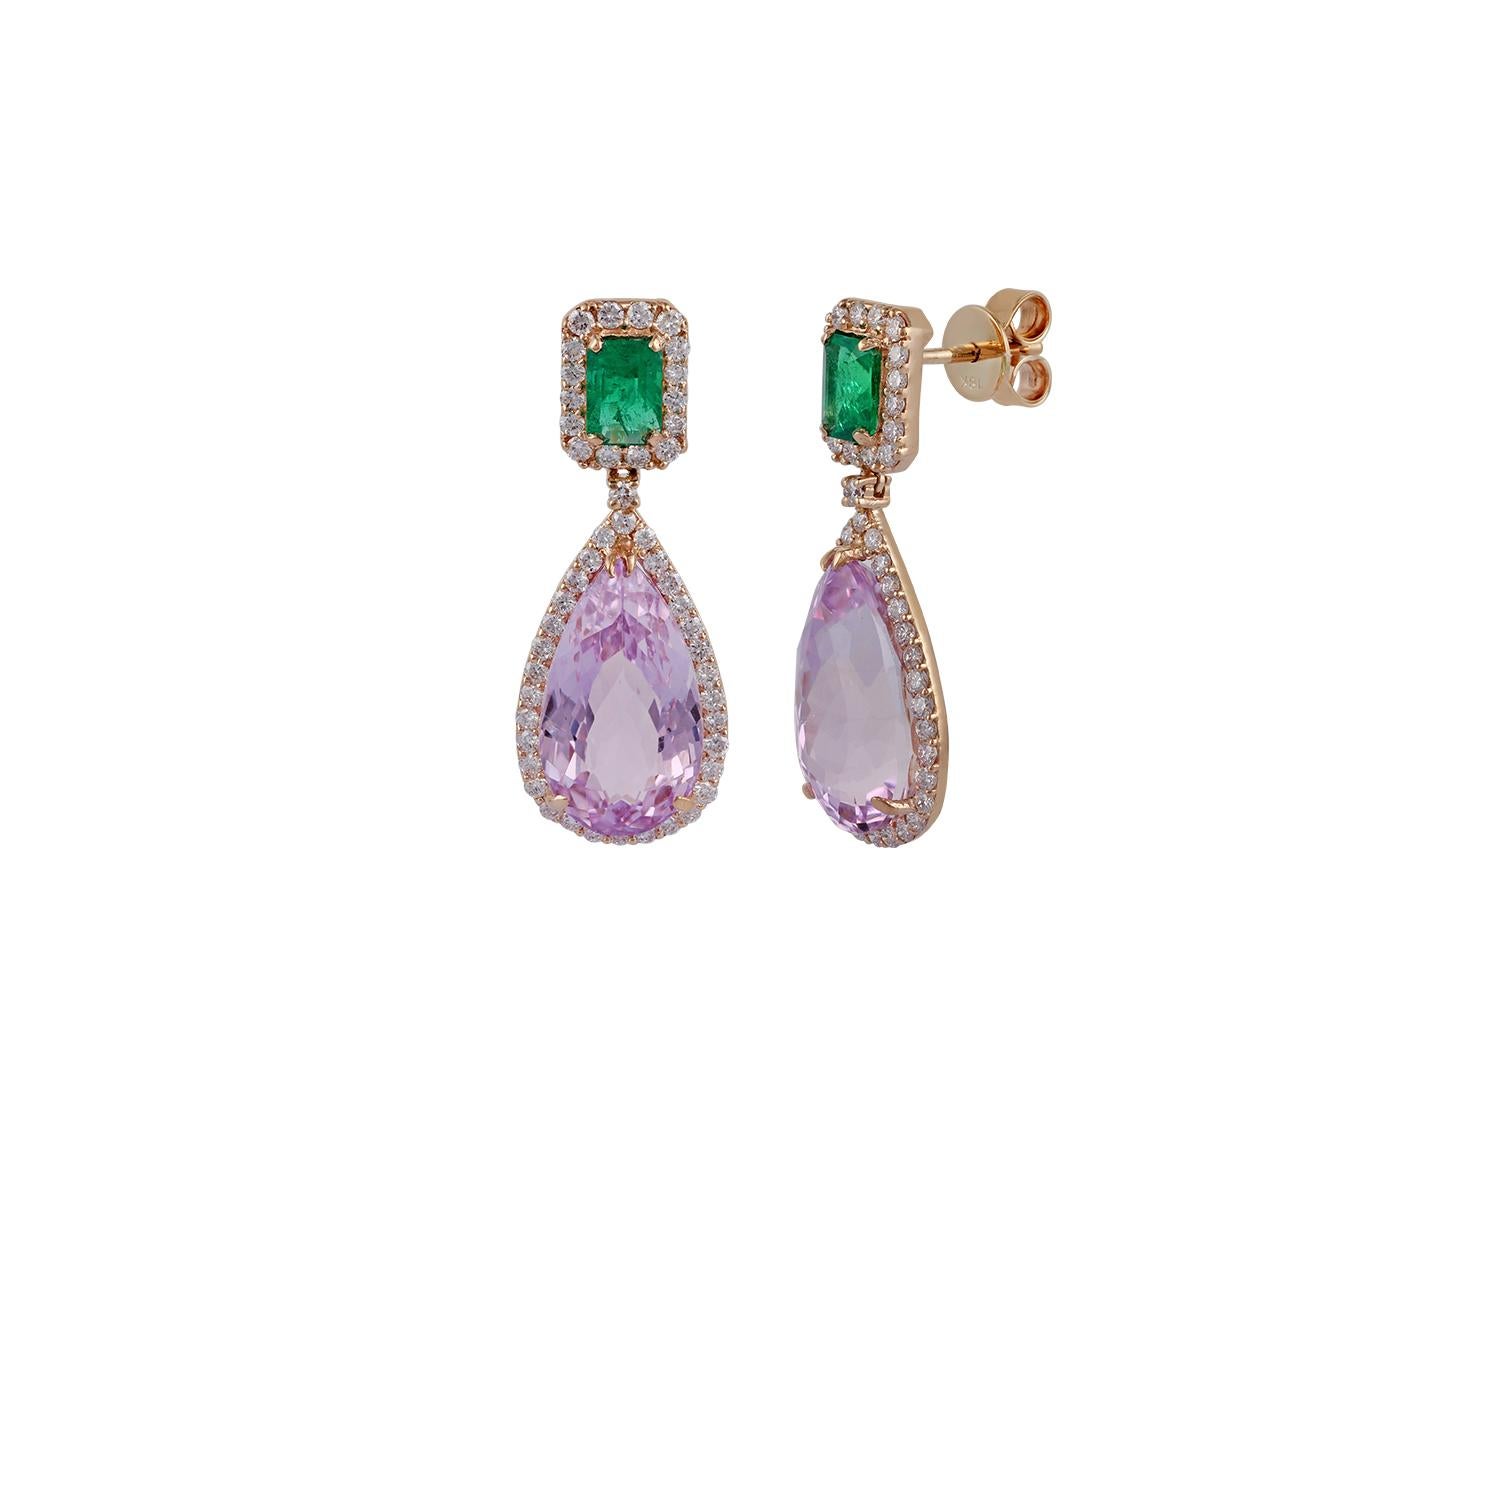 Emerald-cut Emerald 1.16 carats
Pear-shaped Kunzite 15.62 carats
Round Diamonds 1.06 carats
18kt Yellow Gold 4.31 grams